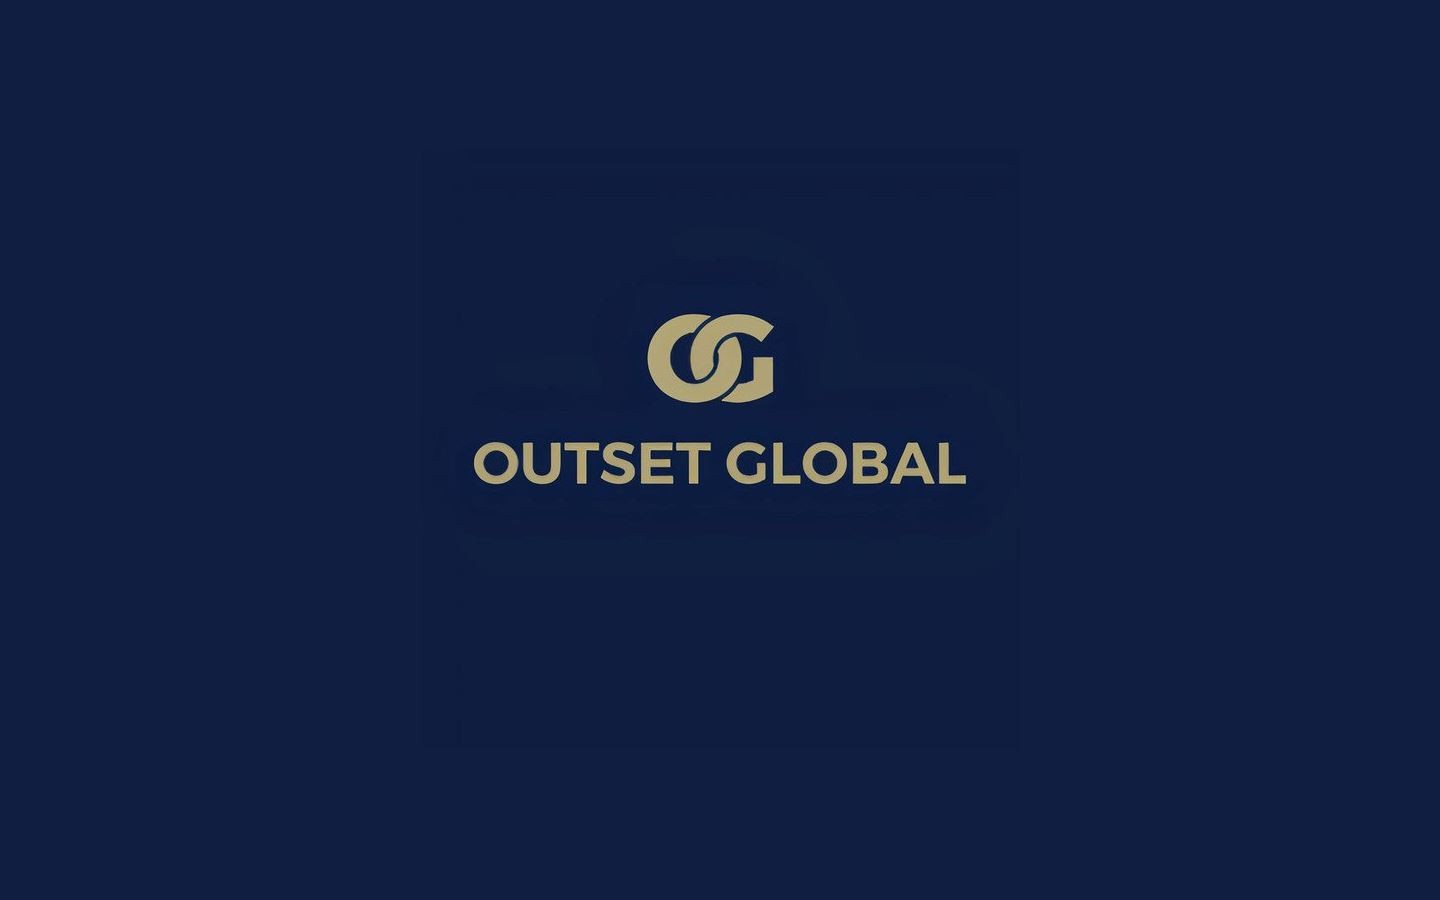 Outset Global LinkedIn